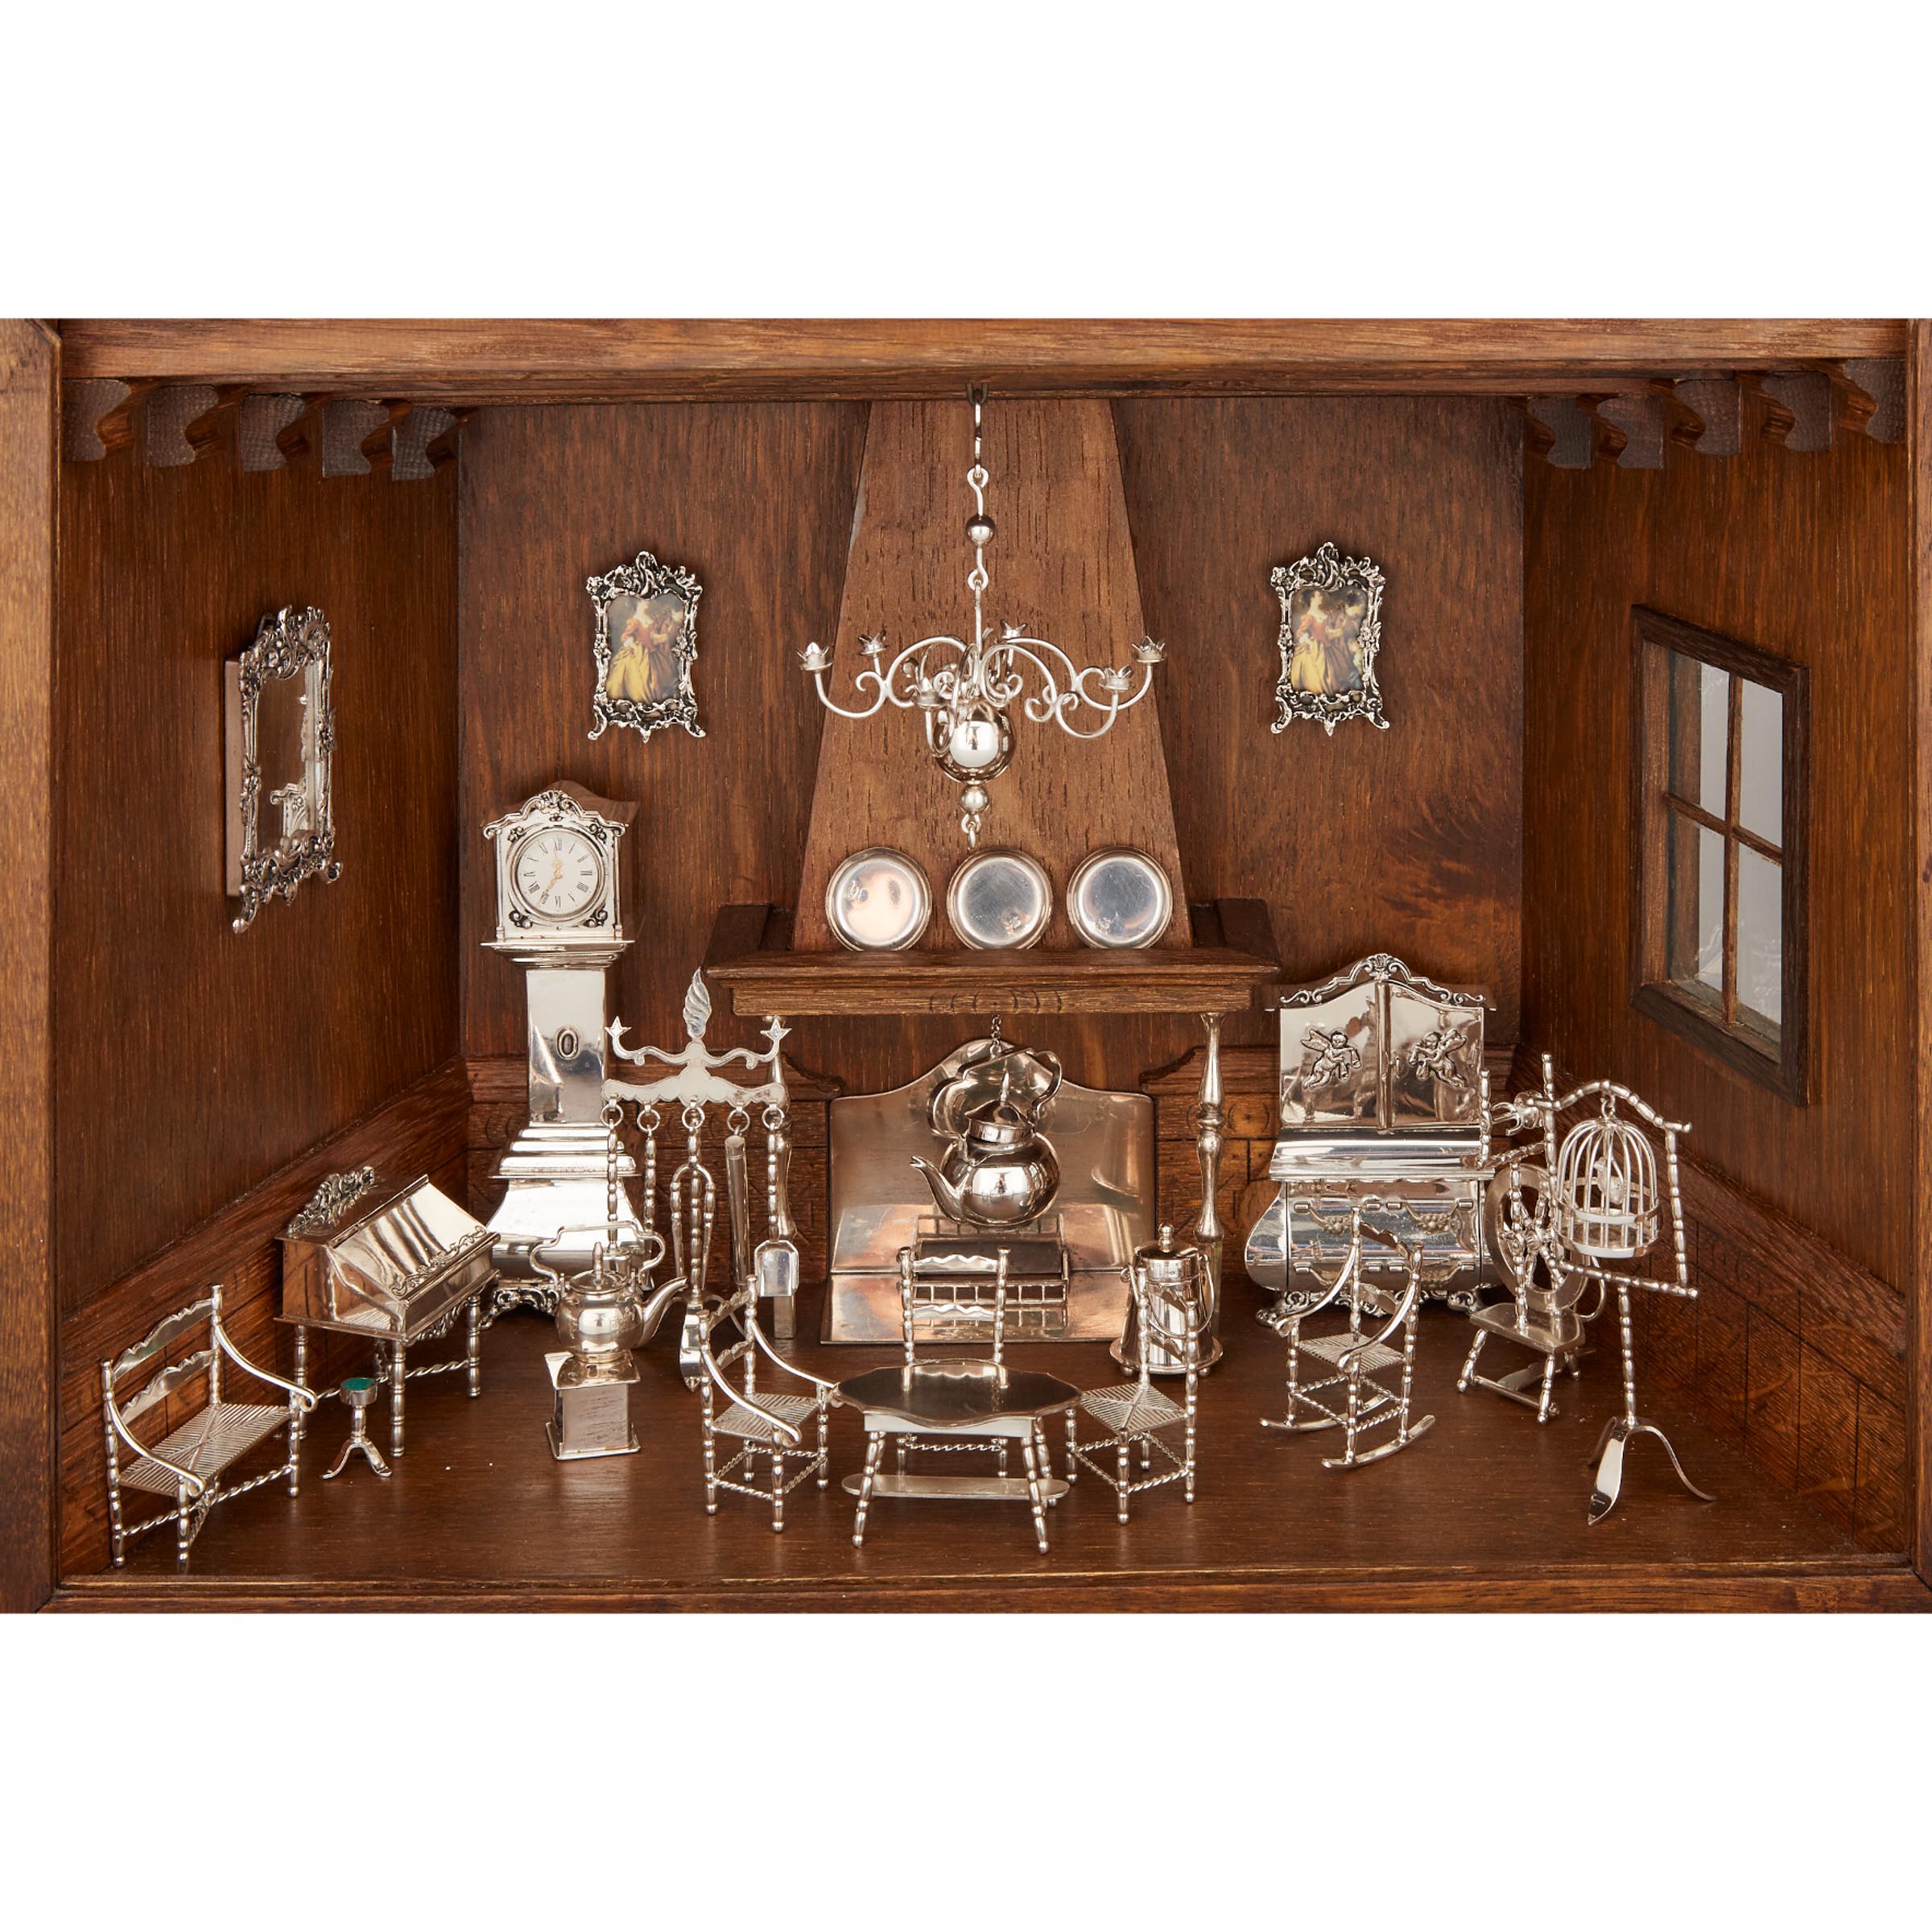 Dutch Silver Miniature Living Room Diorama, H. Hooykaas, Schoonhoven, 20th century